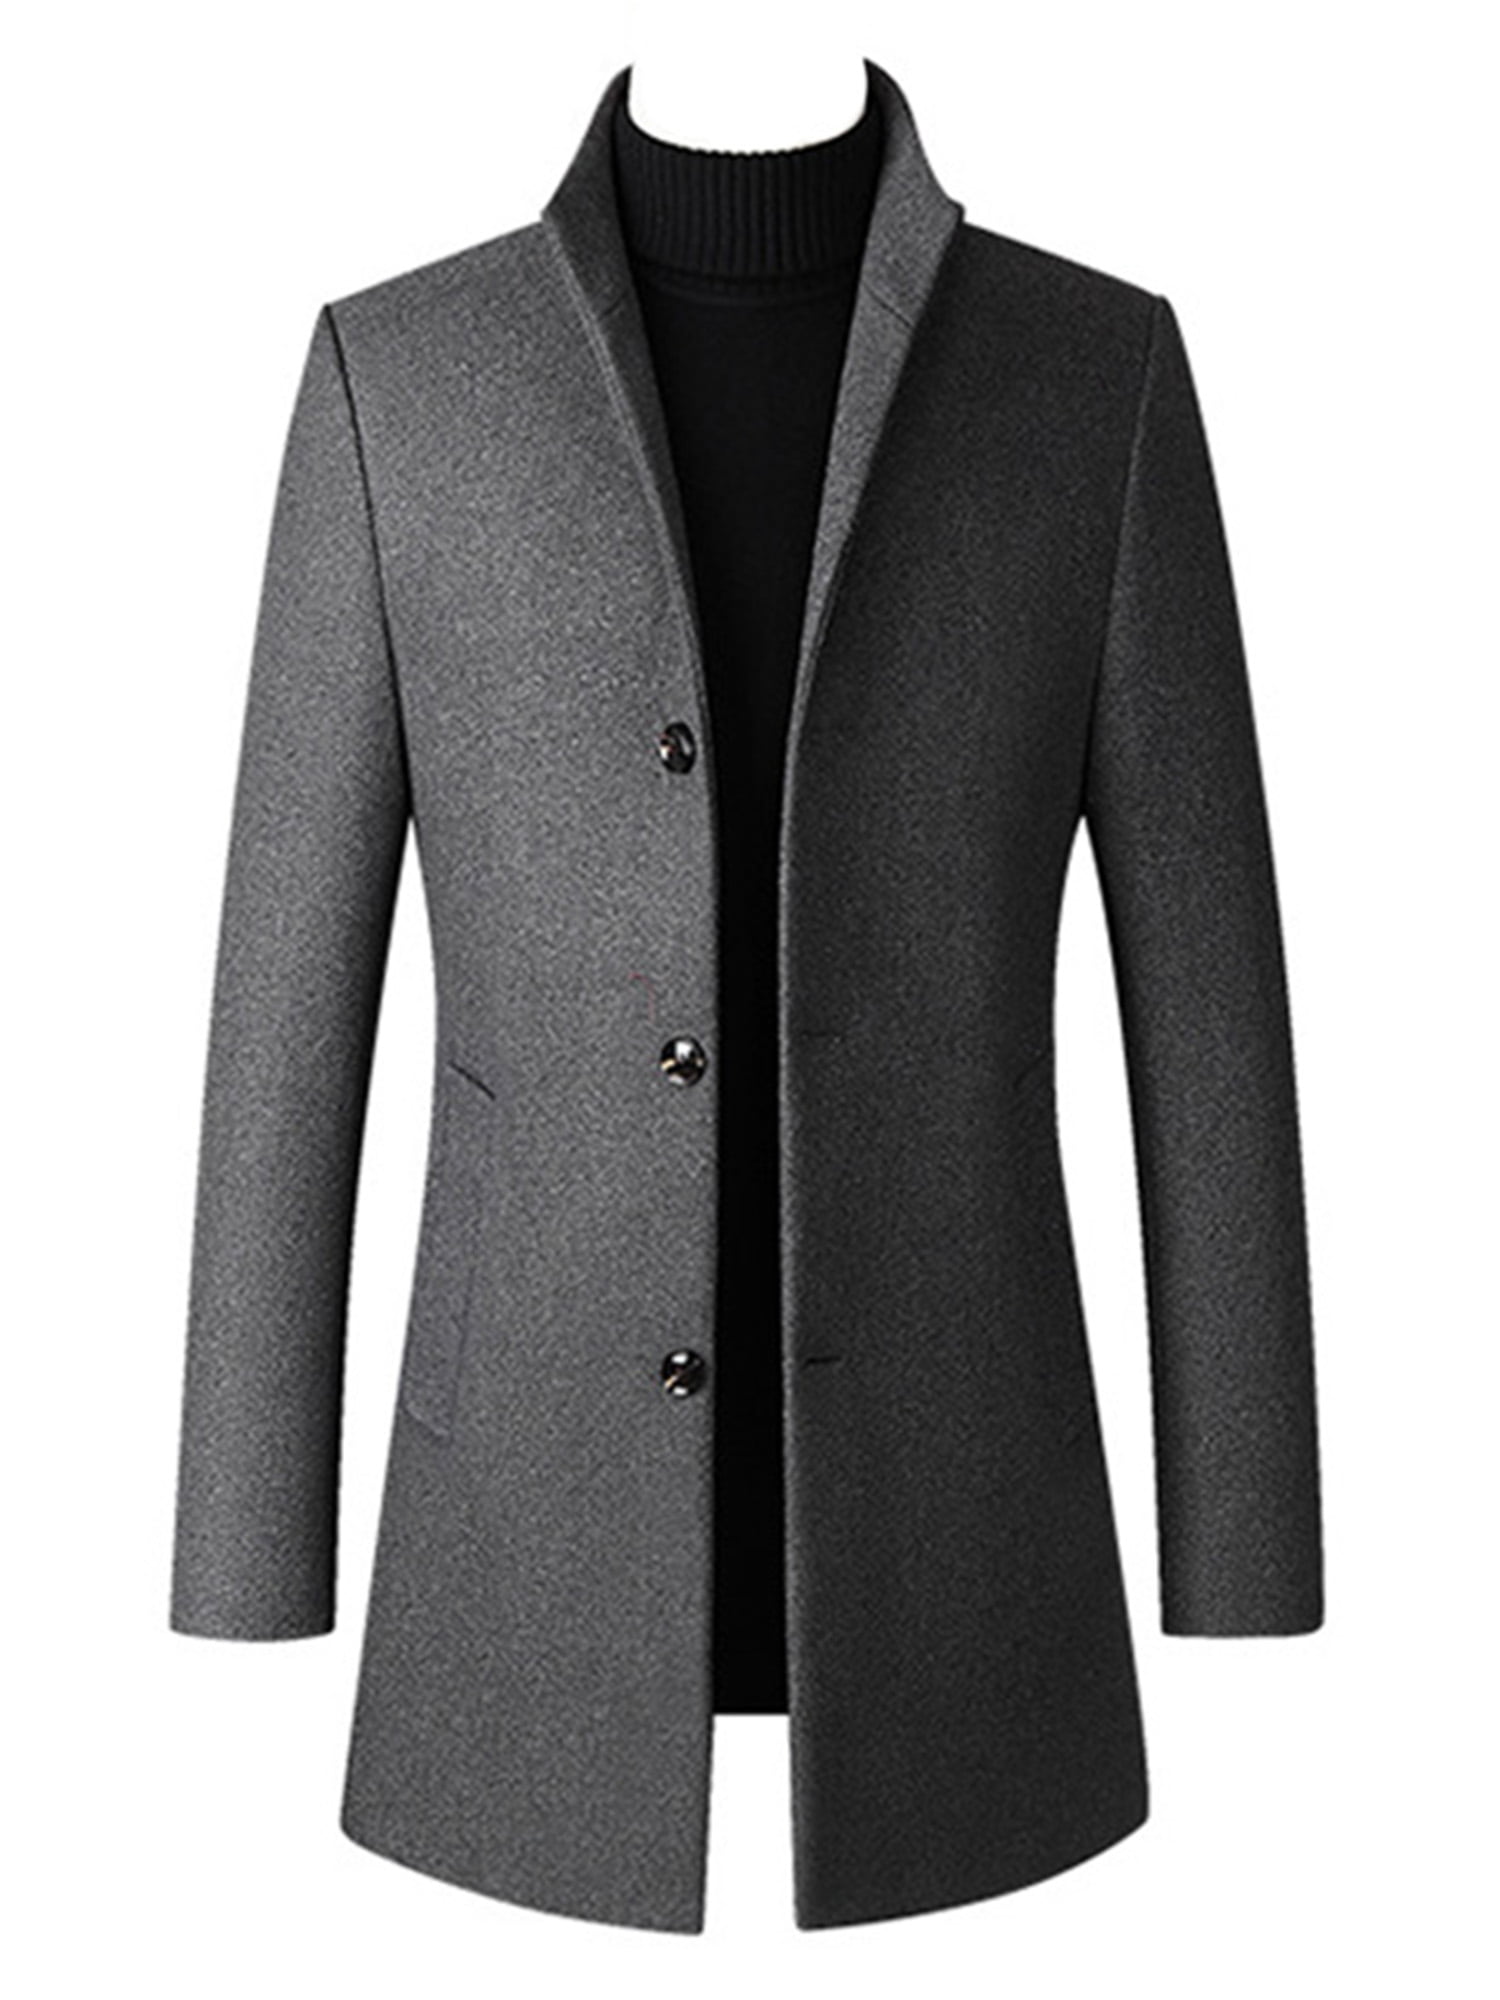 Pea Coat Men Single Breasted.Mens Autumn Winter Warm Casual Packwork Pocket Zipper Hooded Jacket Top Coat